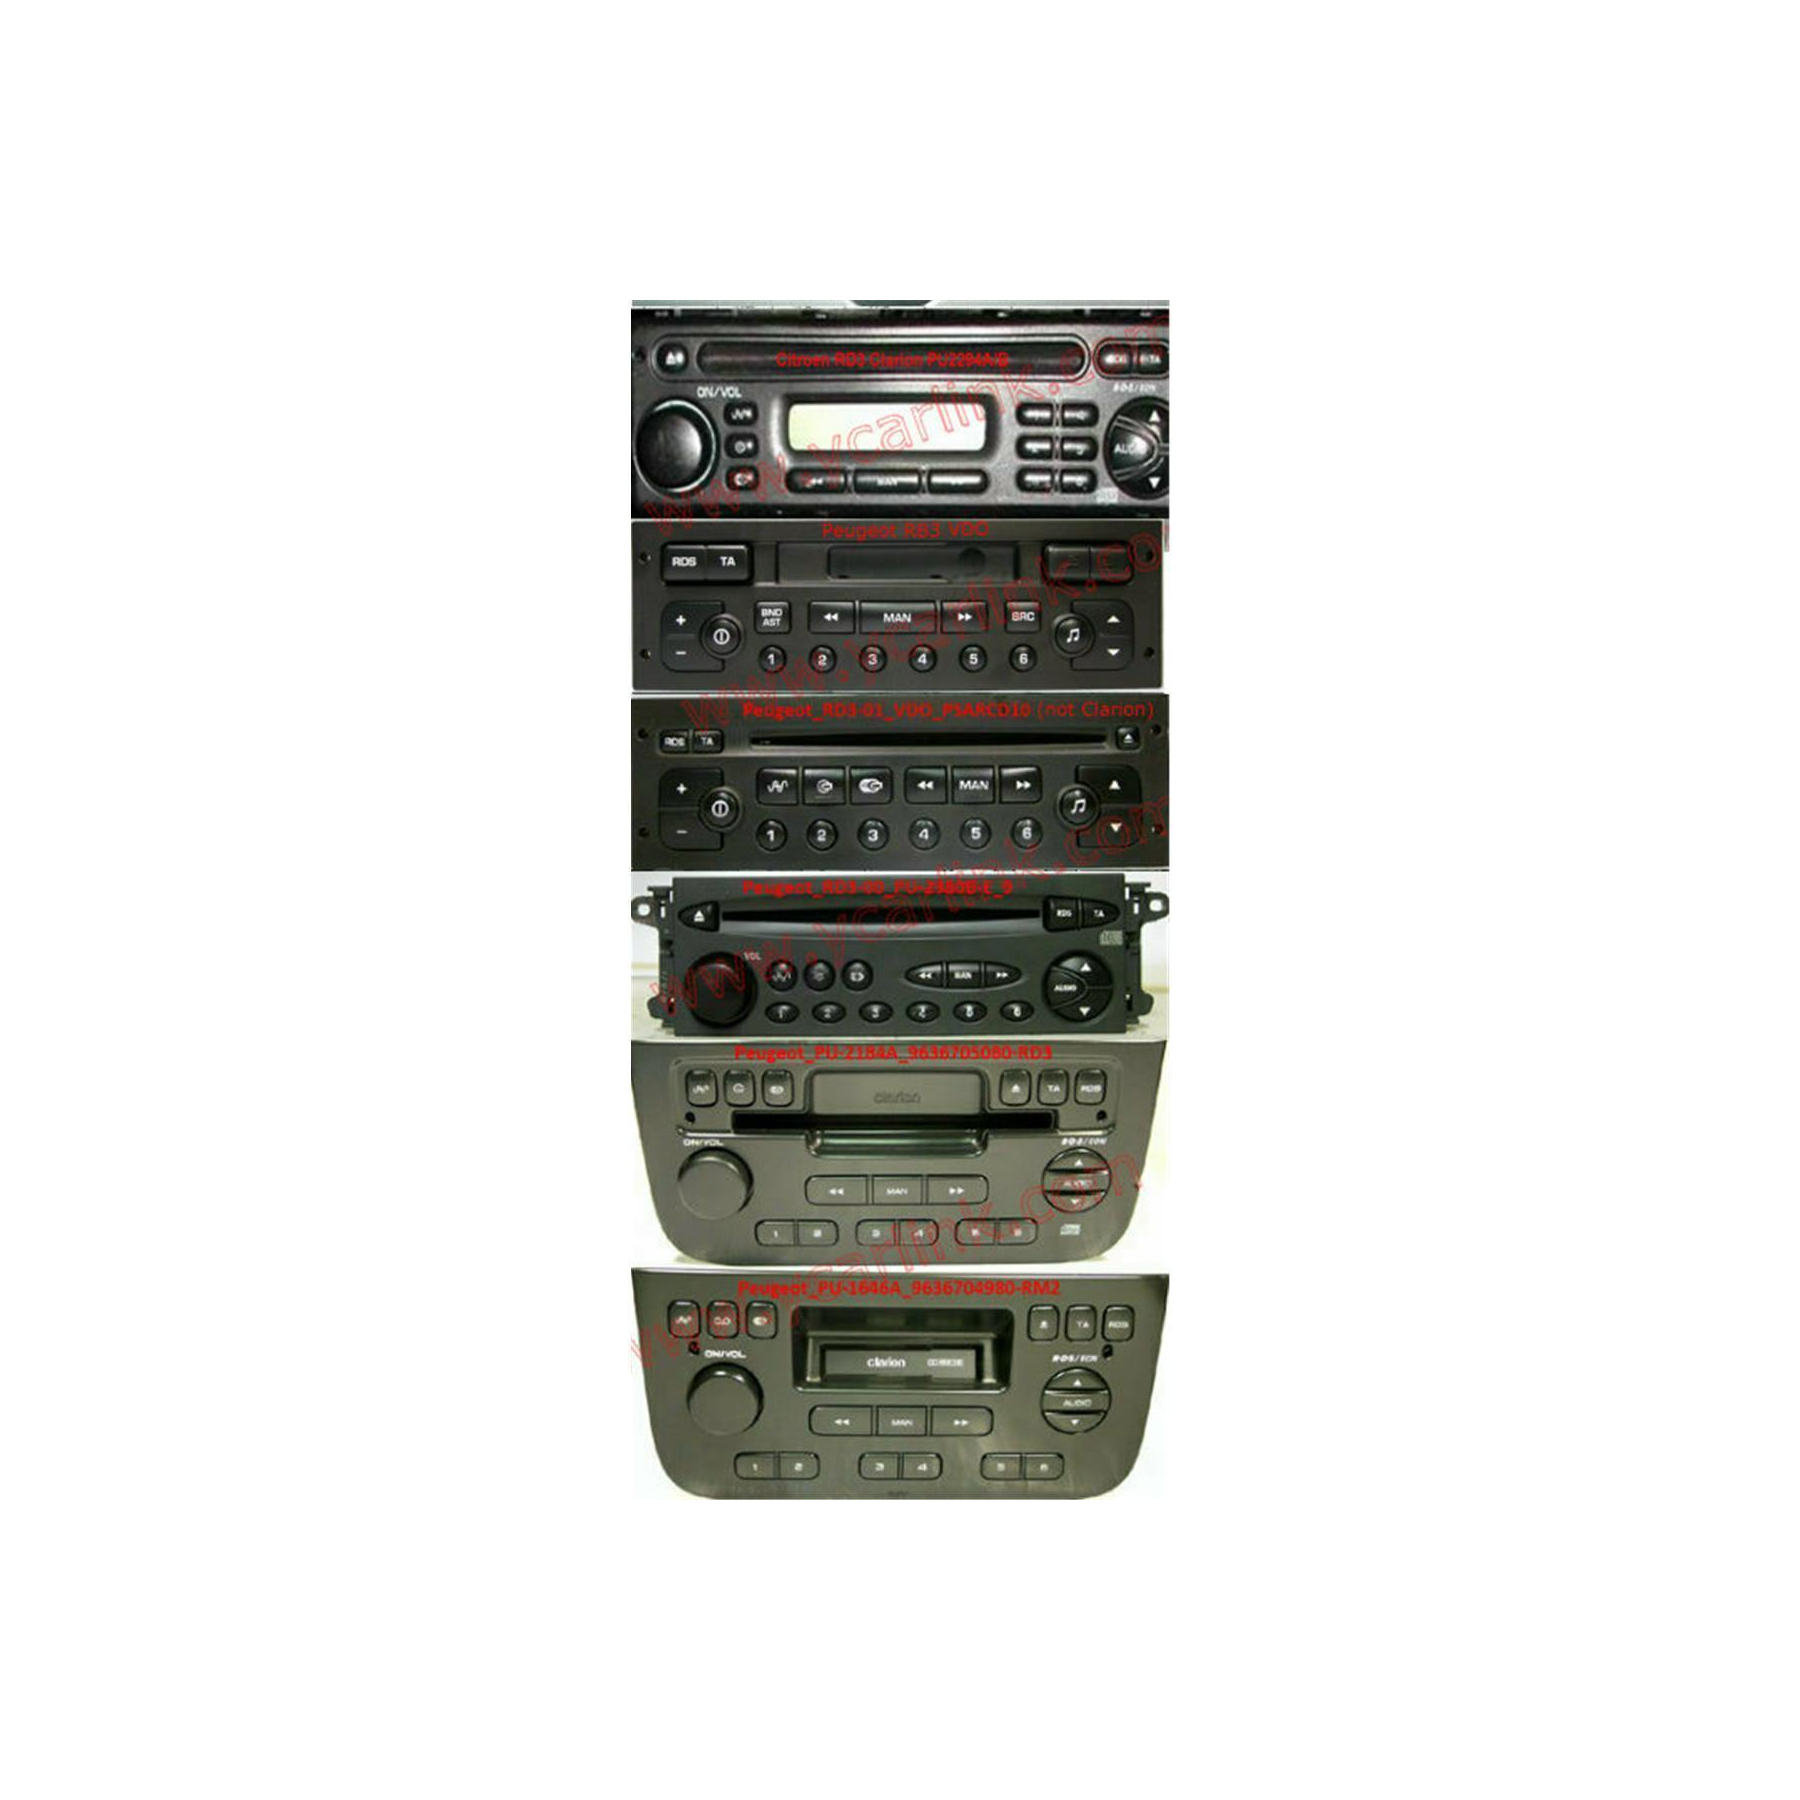 CD Wechsler AUX IPod Iphone Ipad Adapter RD3 Radio's, 49,99 €